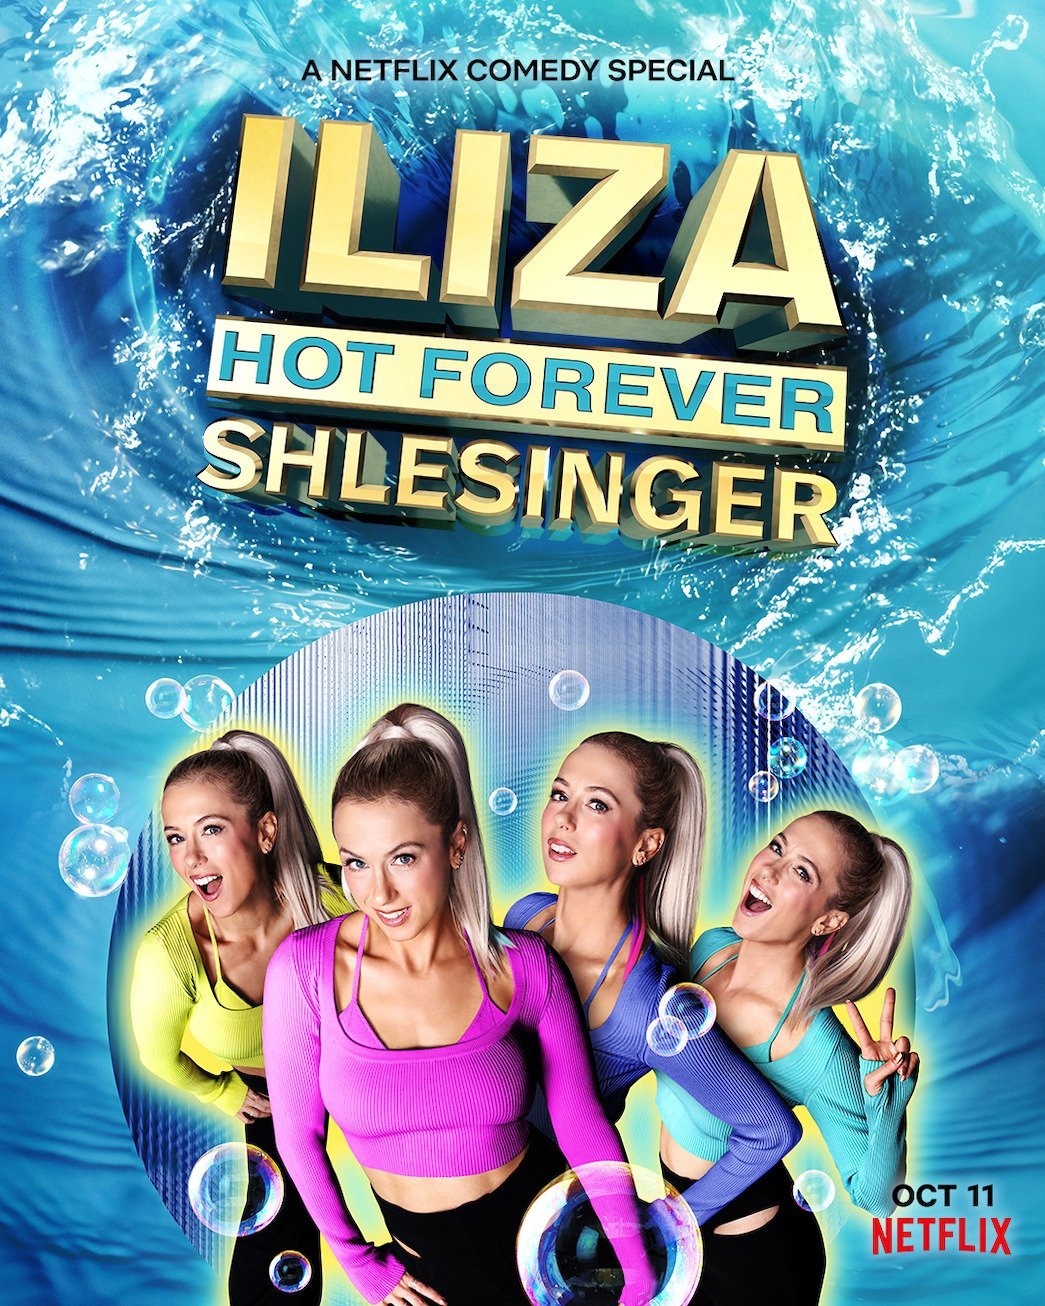 Extra Large TV Poster Image for Iliza Shlesinger: Hot Forever 